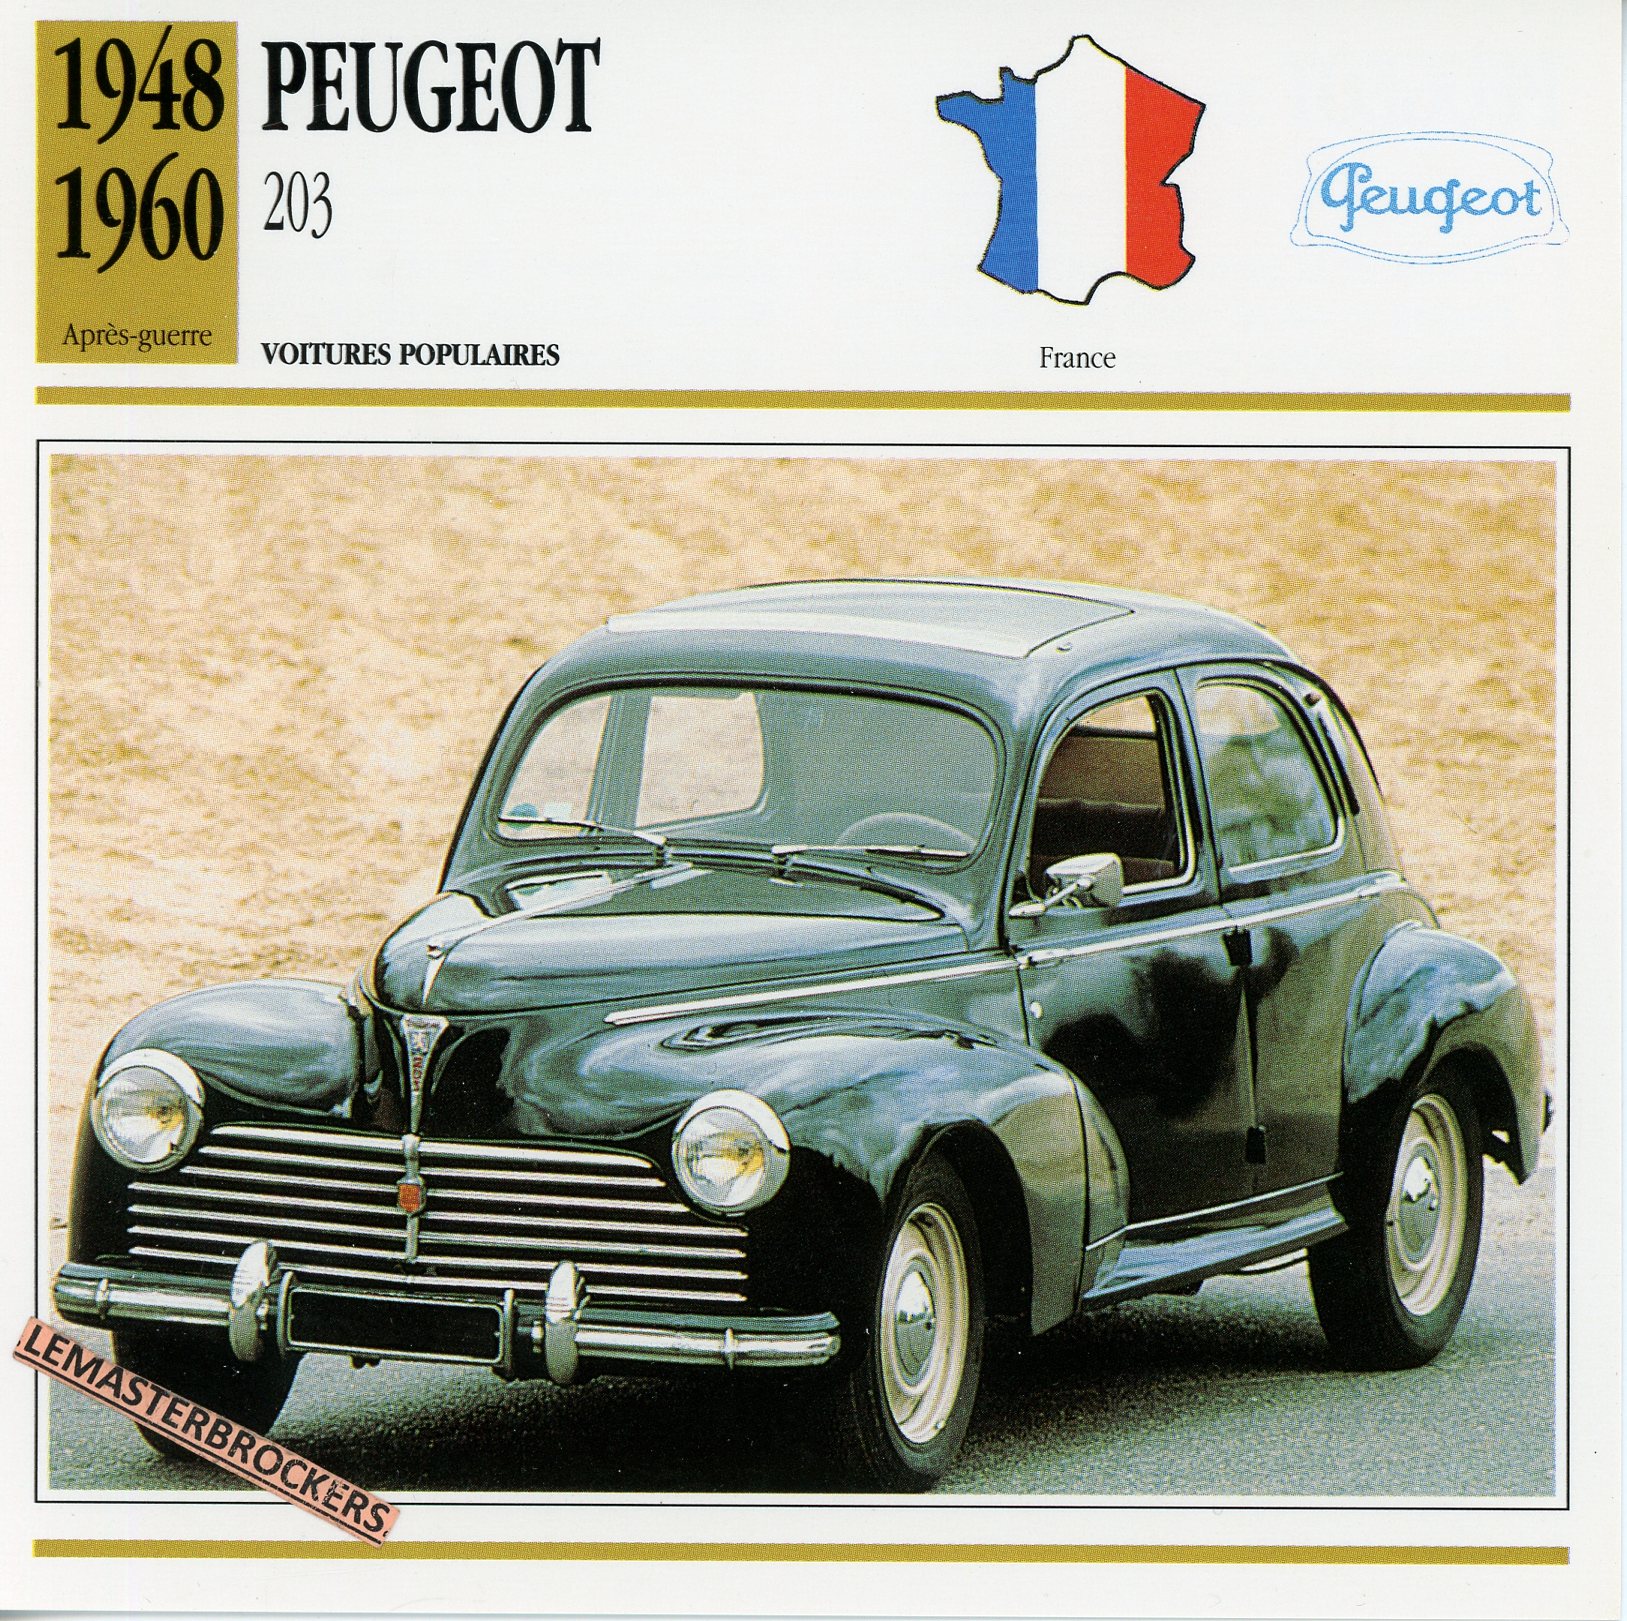 PEUGEOT-203-1948-1960-FICHE-AUTO-ATLAS-LEMASTERBROCKERS